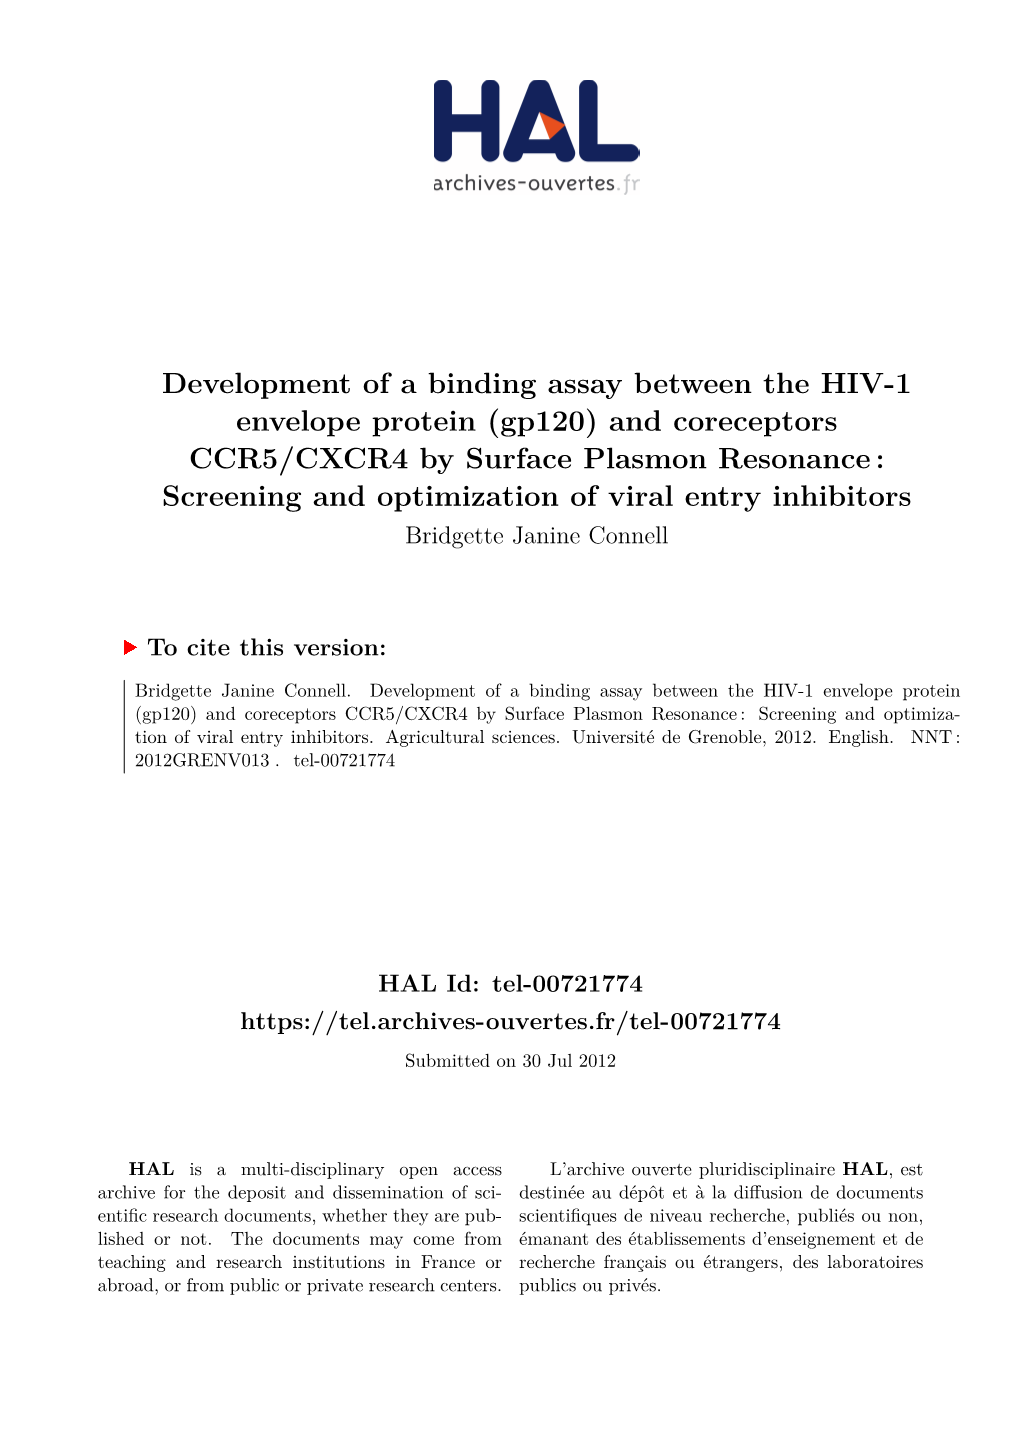 Development of a Binding Assay Between the HIV-1 Envelope